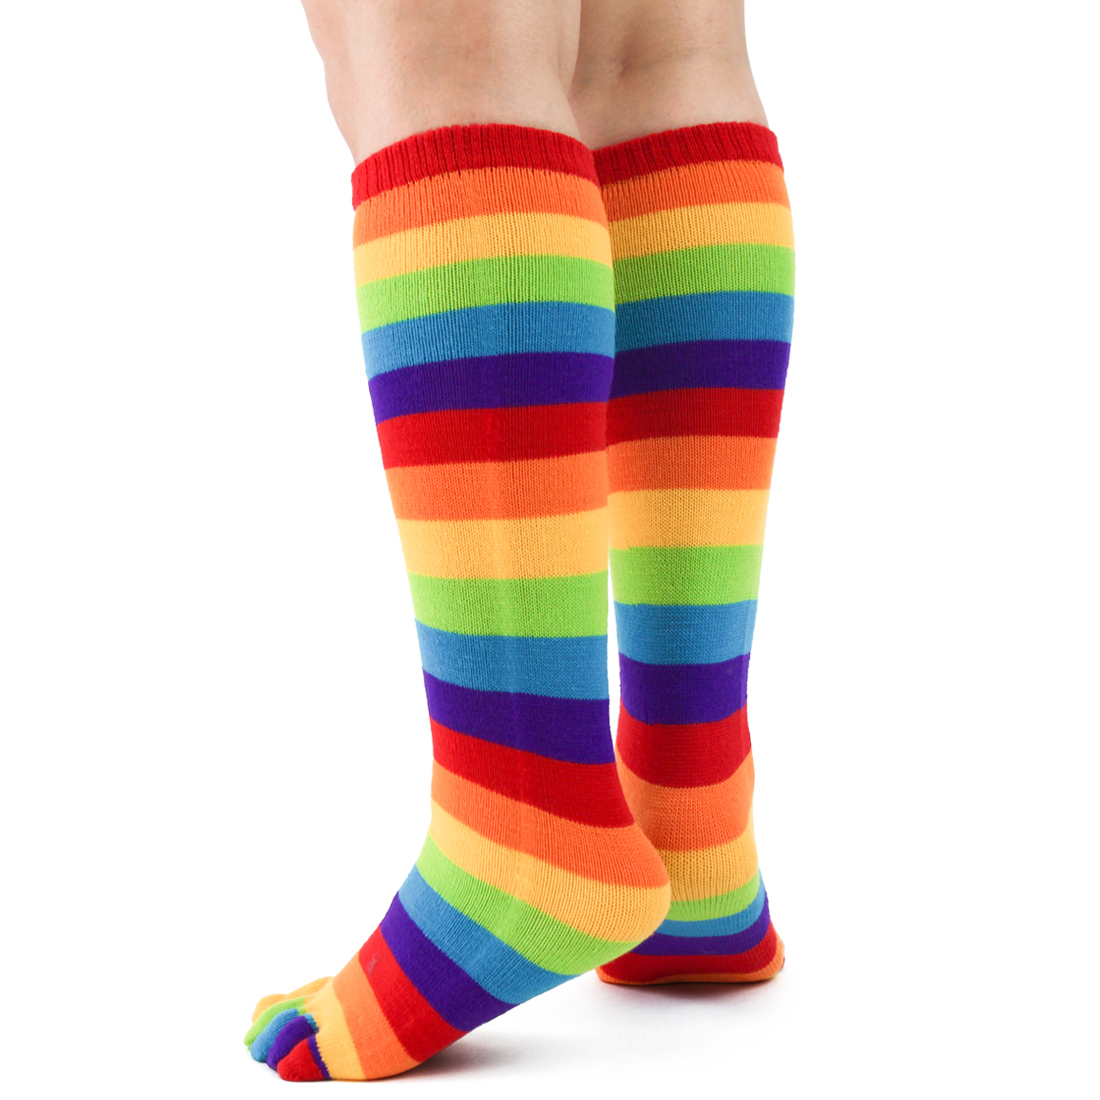 Rainbow Multicolored Toe Socks for Fun and Comfort | Foot Traffic